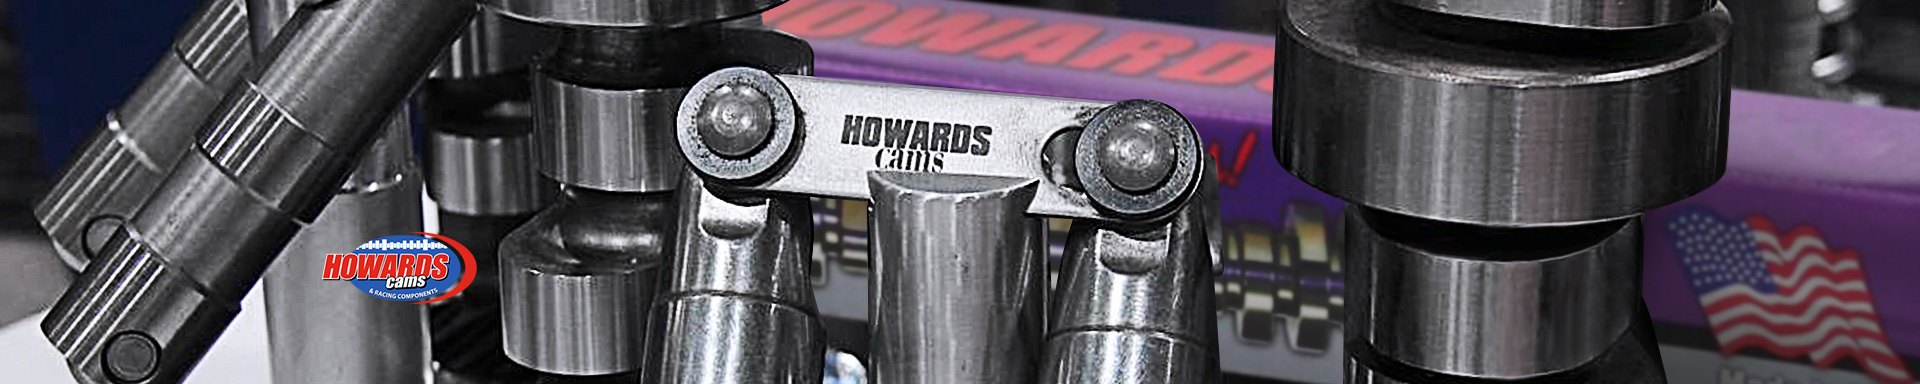 Howards Cams Oils, Fluids, Lubricants